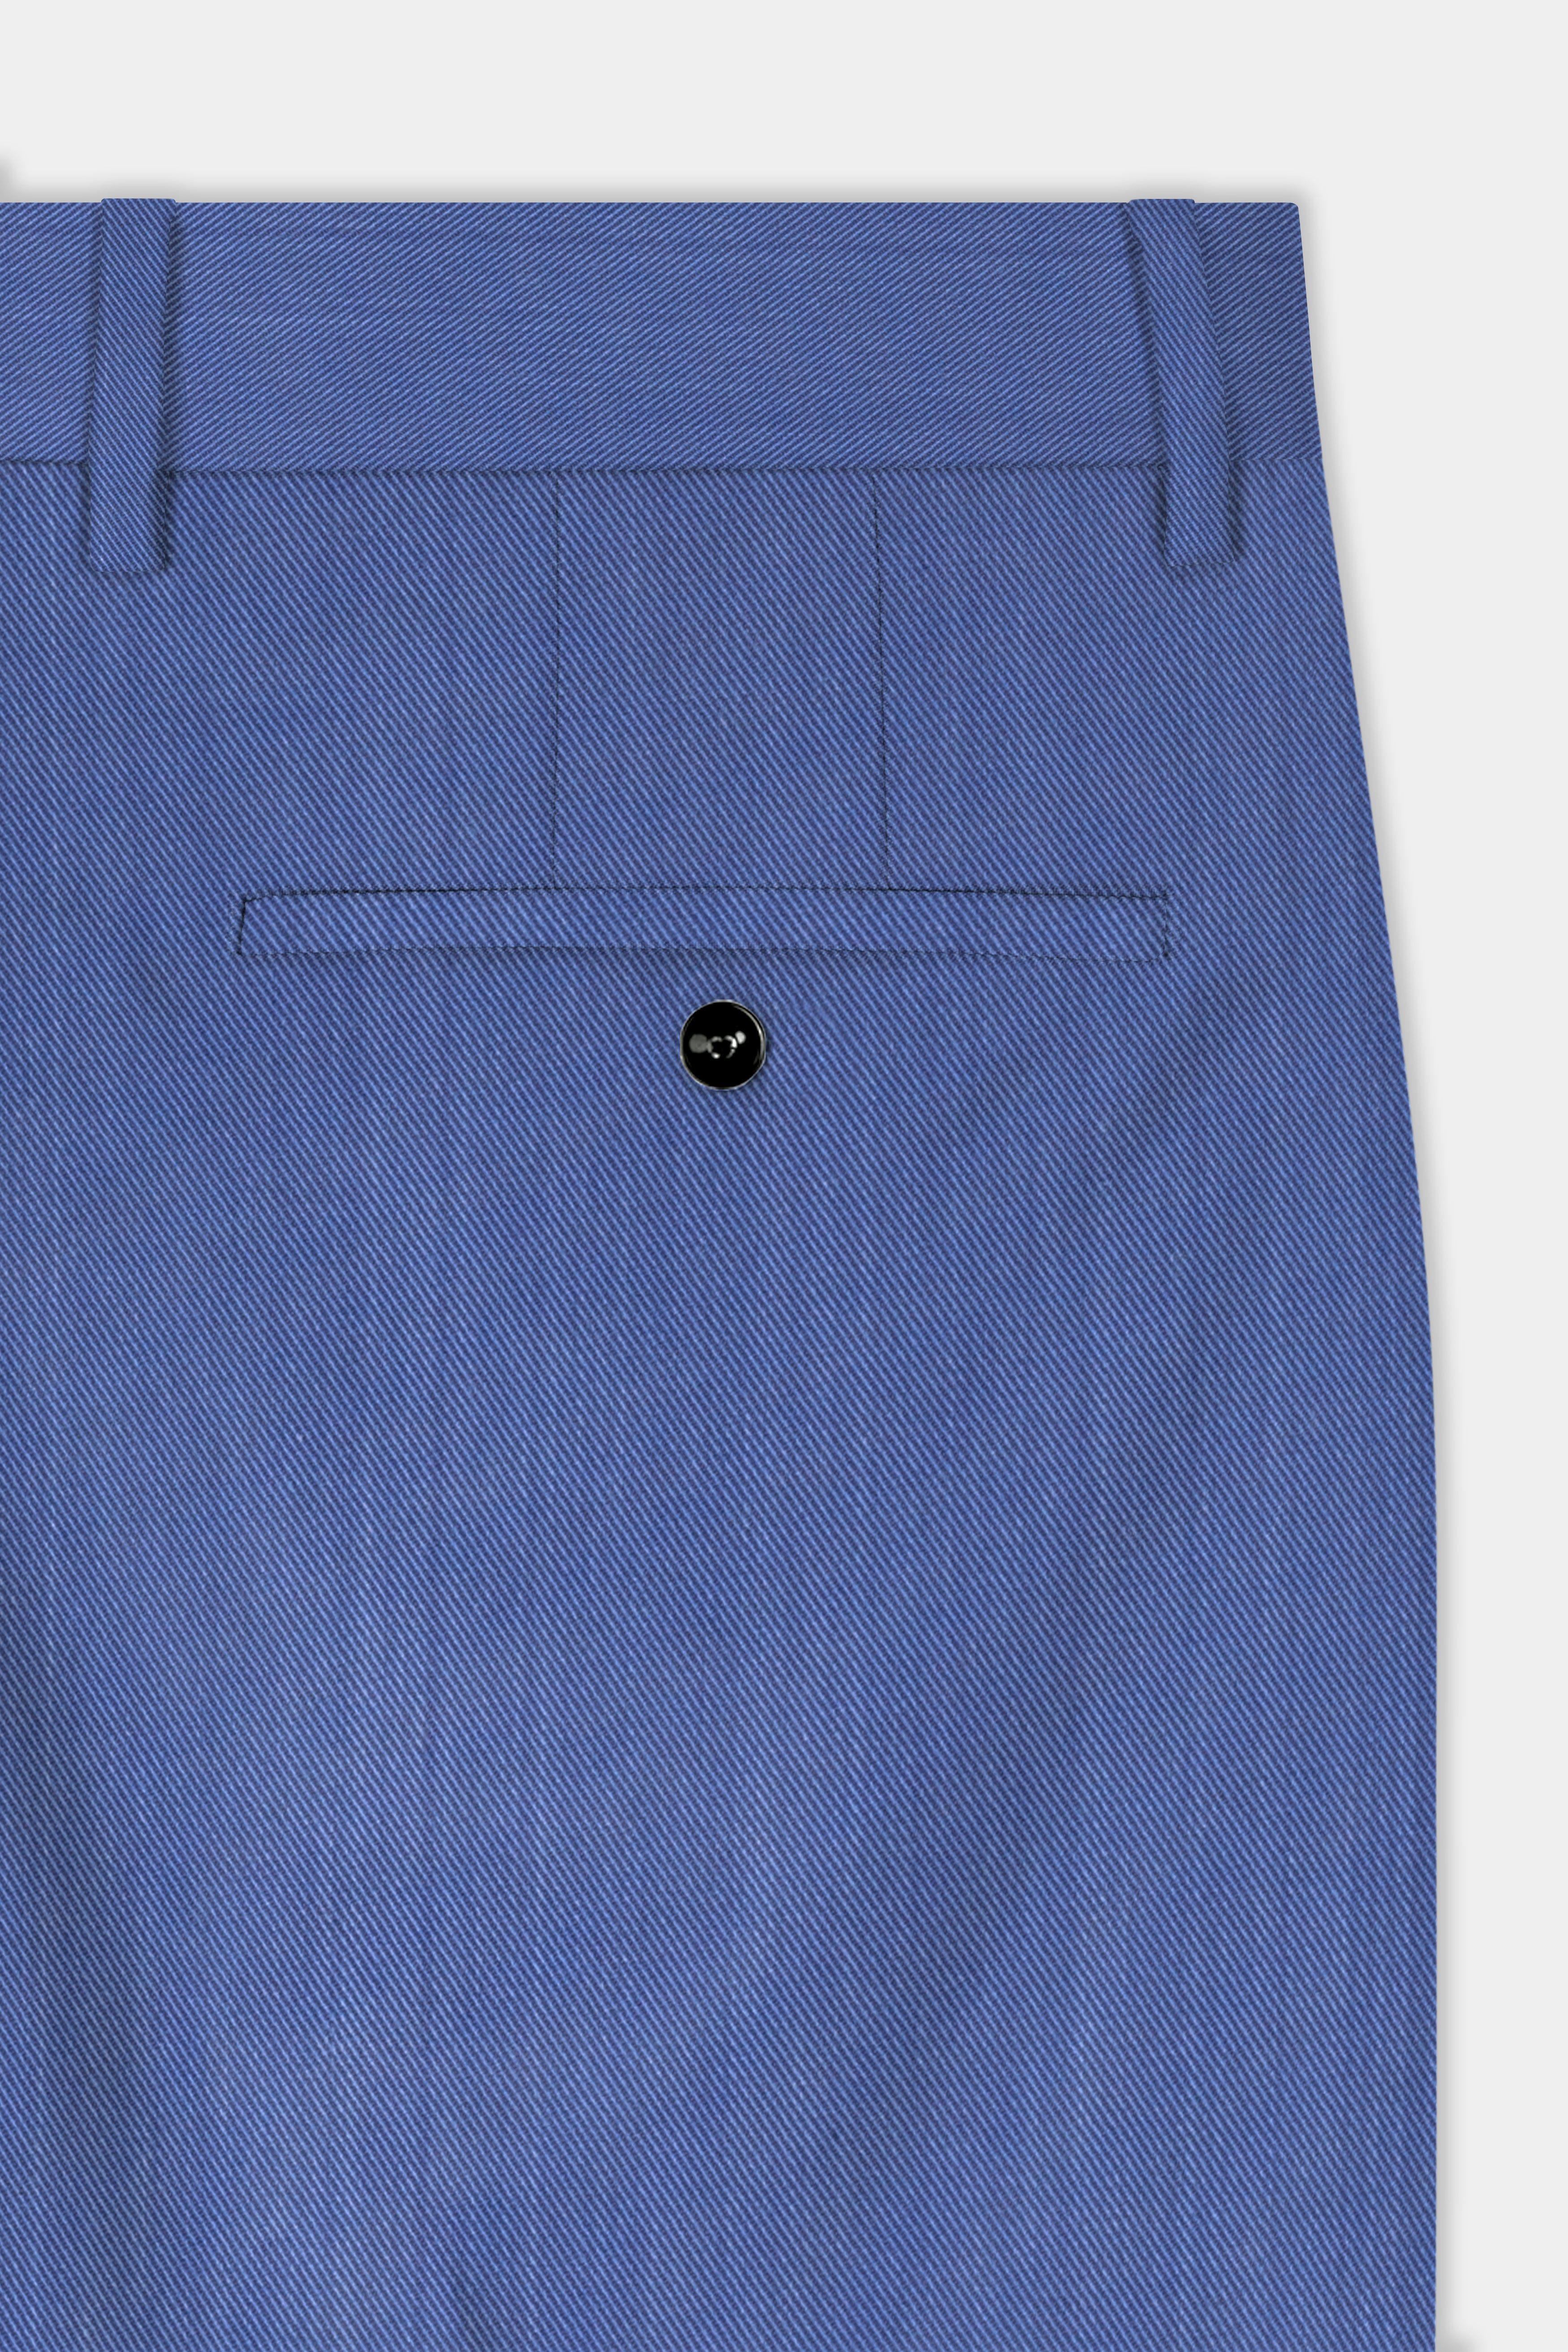 Twilight Blue Premium Cotton Pant